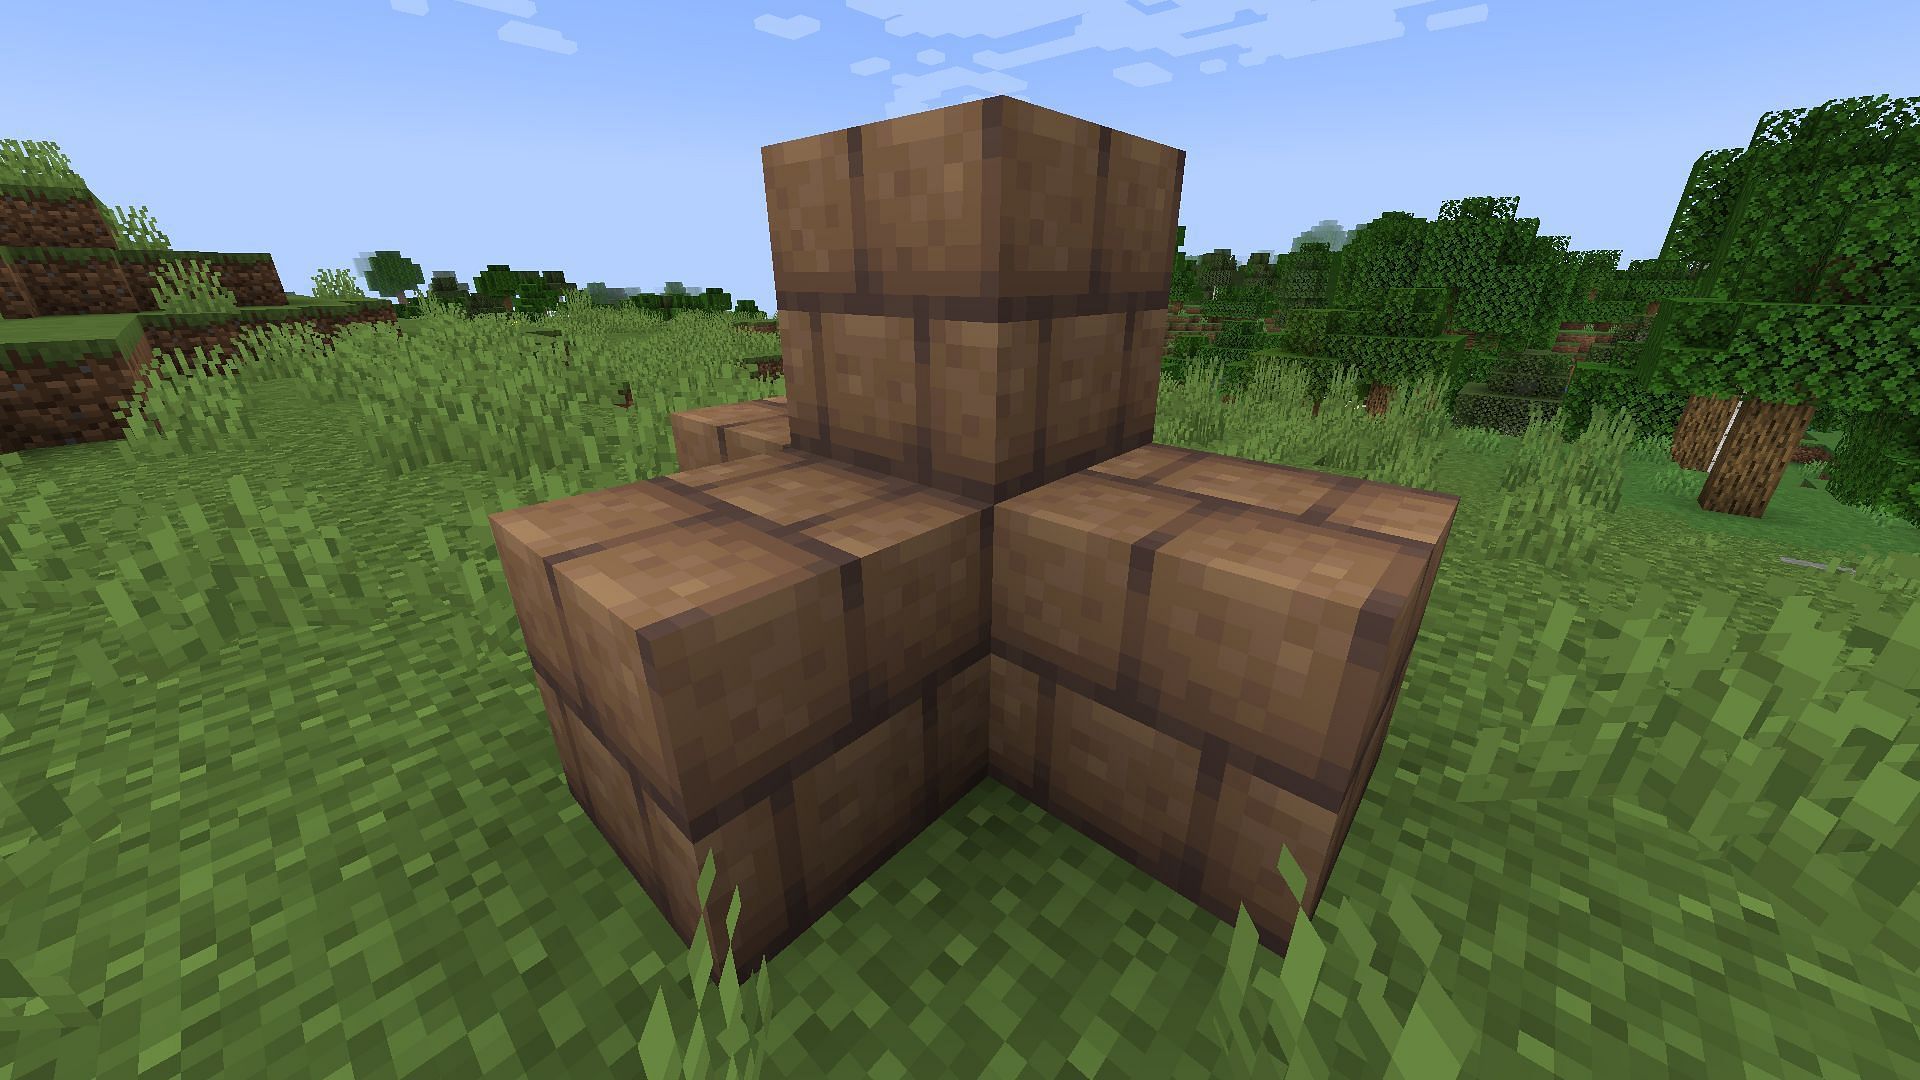 Mud bricks (Image via Minecraft 1.19 update)